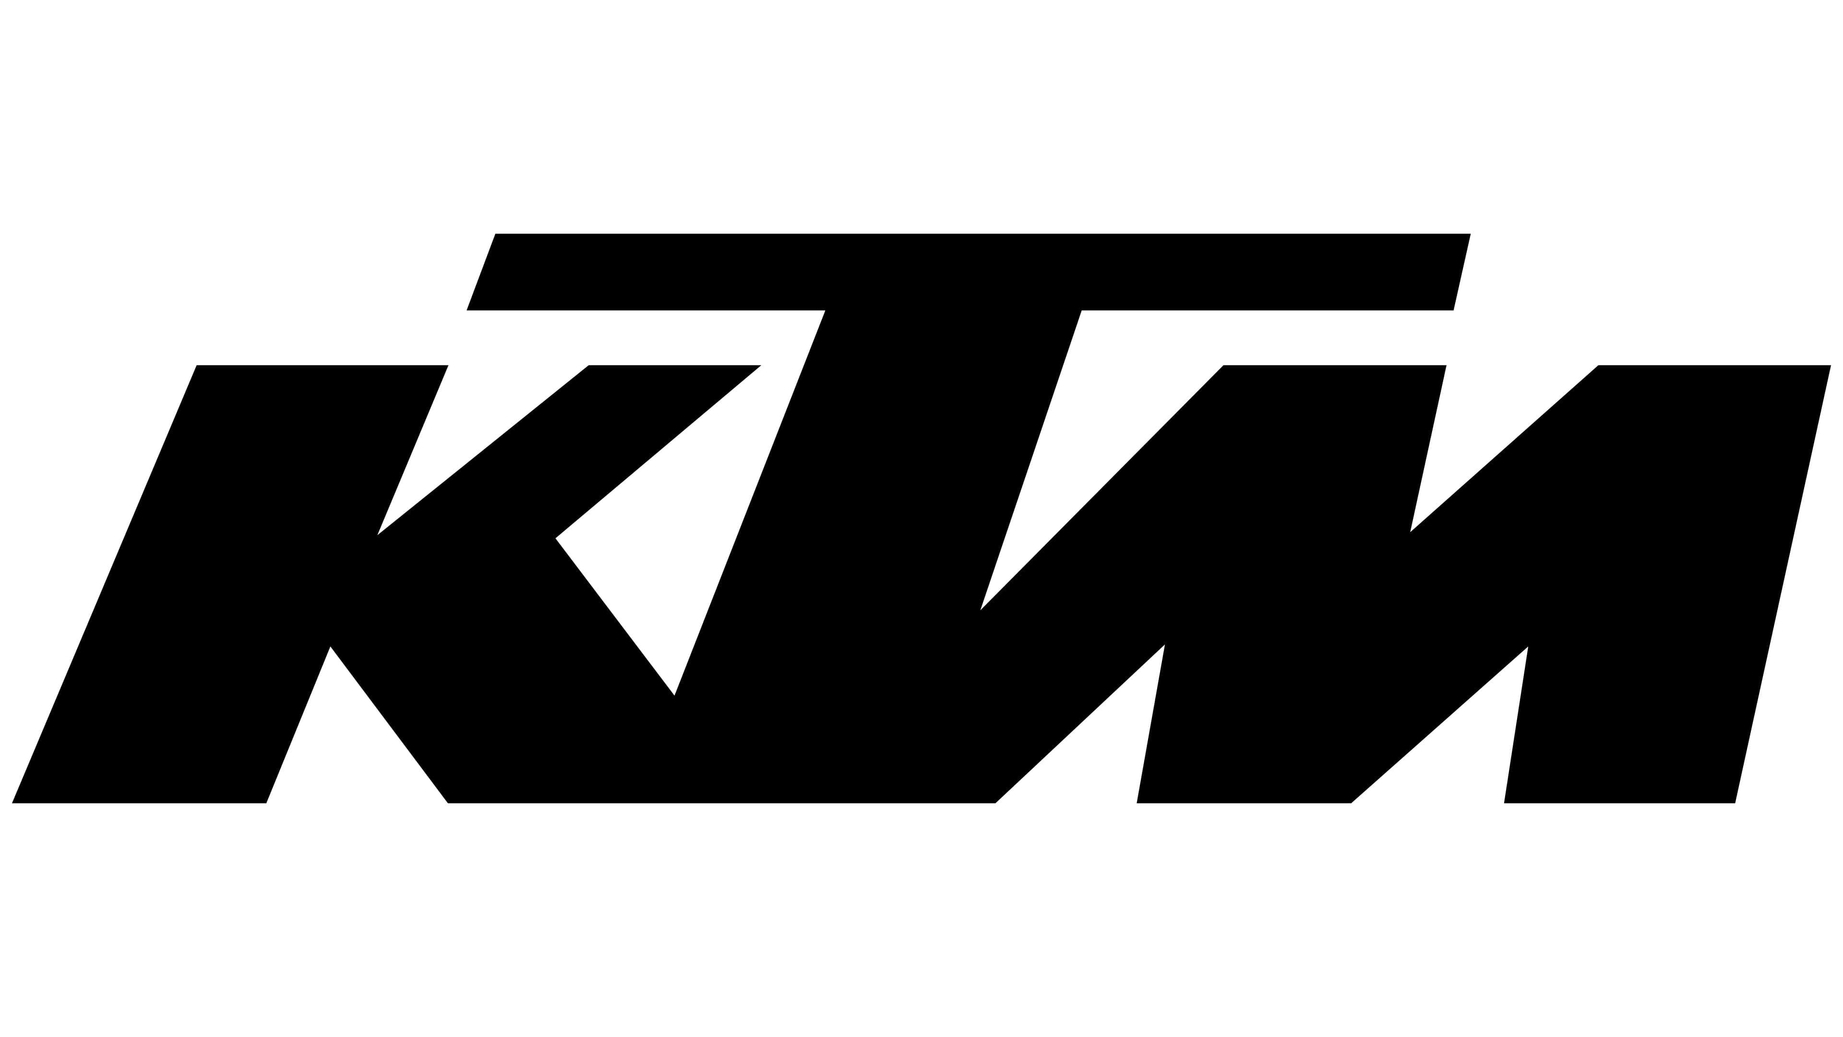 Ktm sign since 2003 present